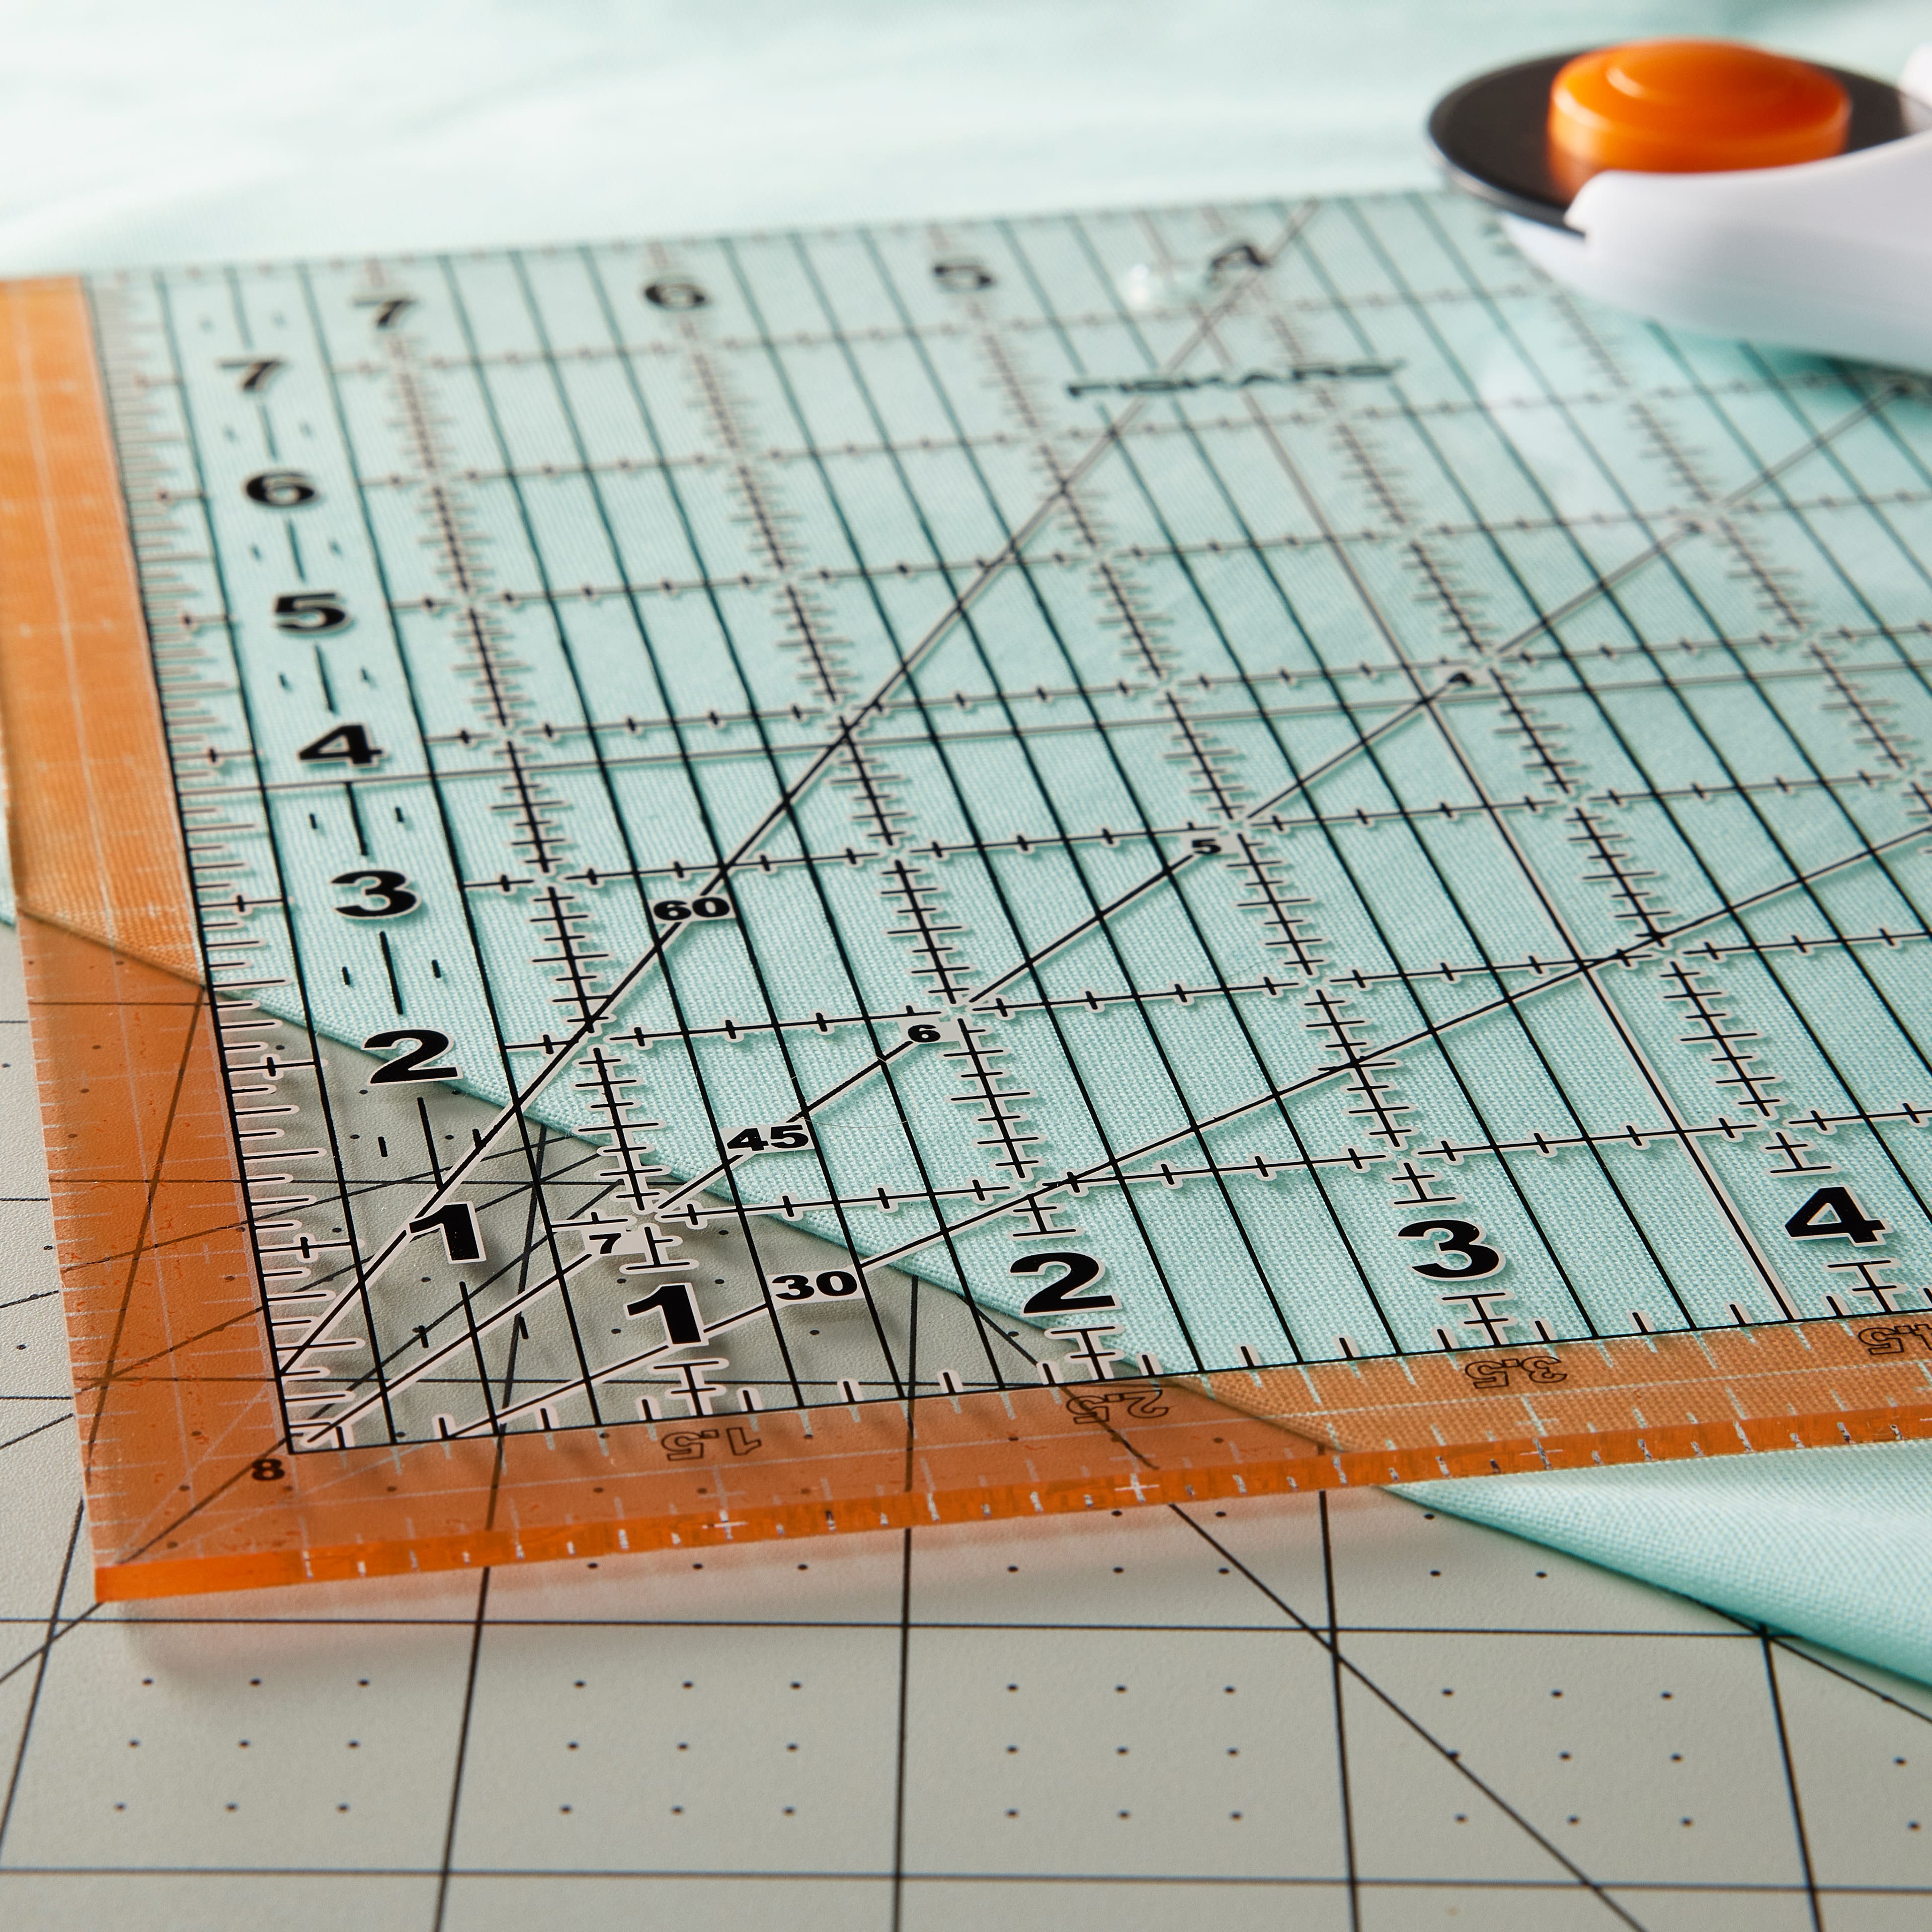 Fiskars&#xAE; Square Acrylic Ruler, 8.5&#x22; x 8.5&#x22;